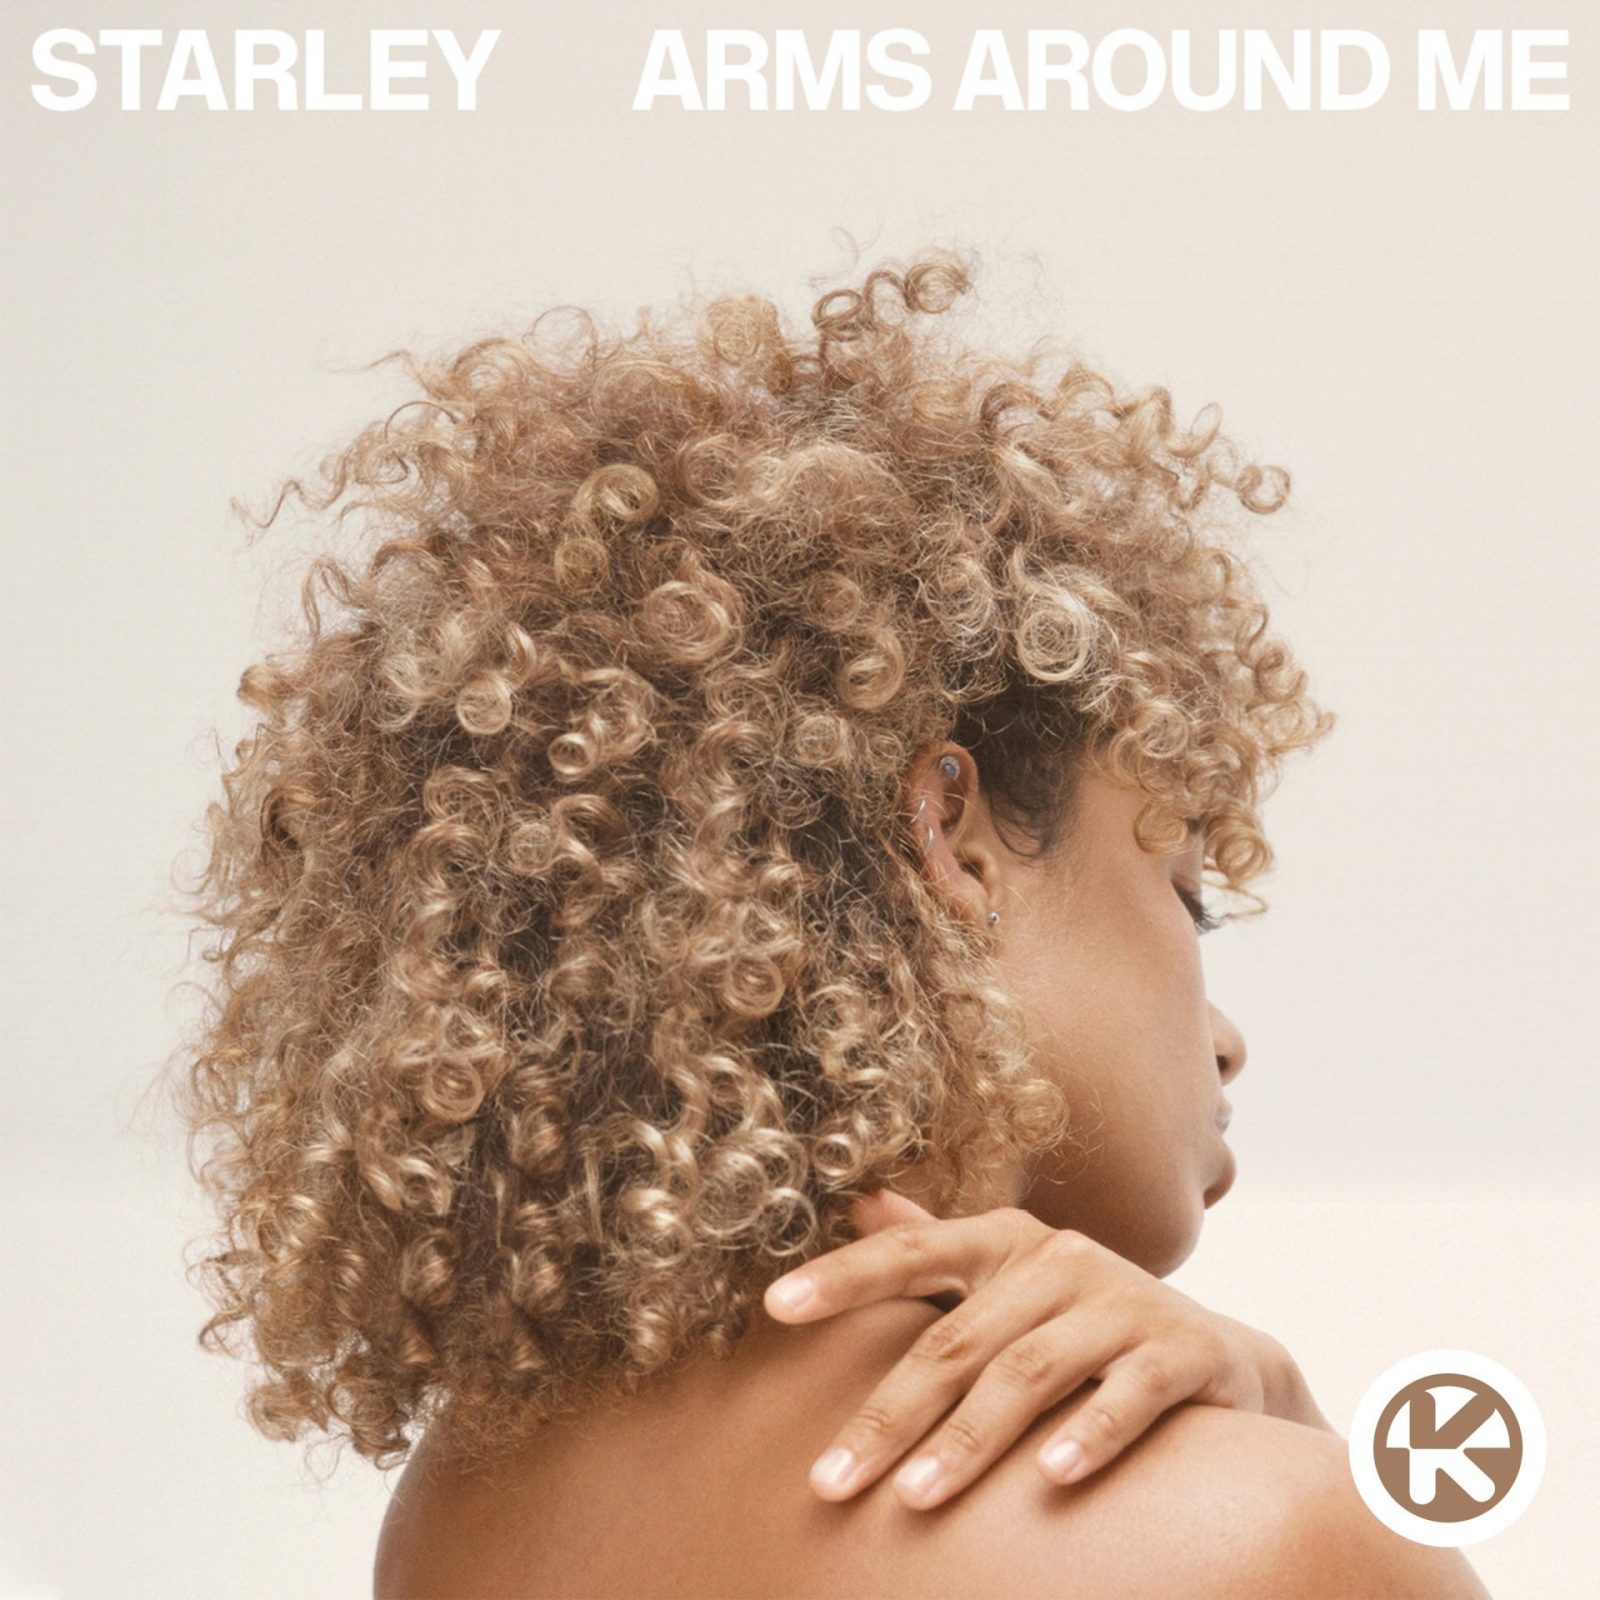 Starley "Arms Around Me"